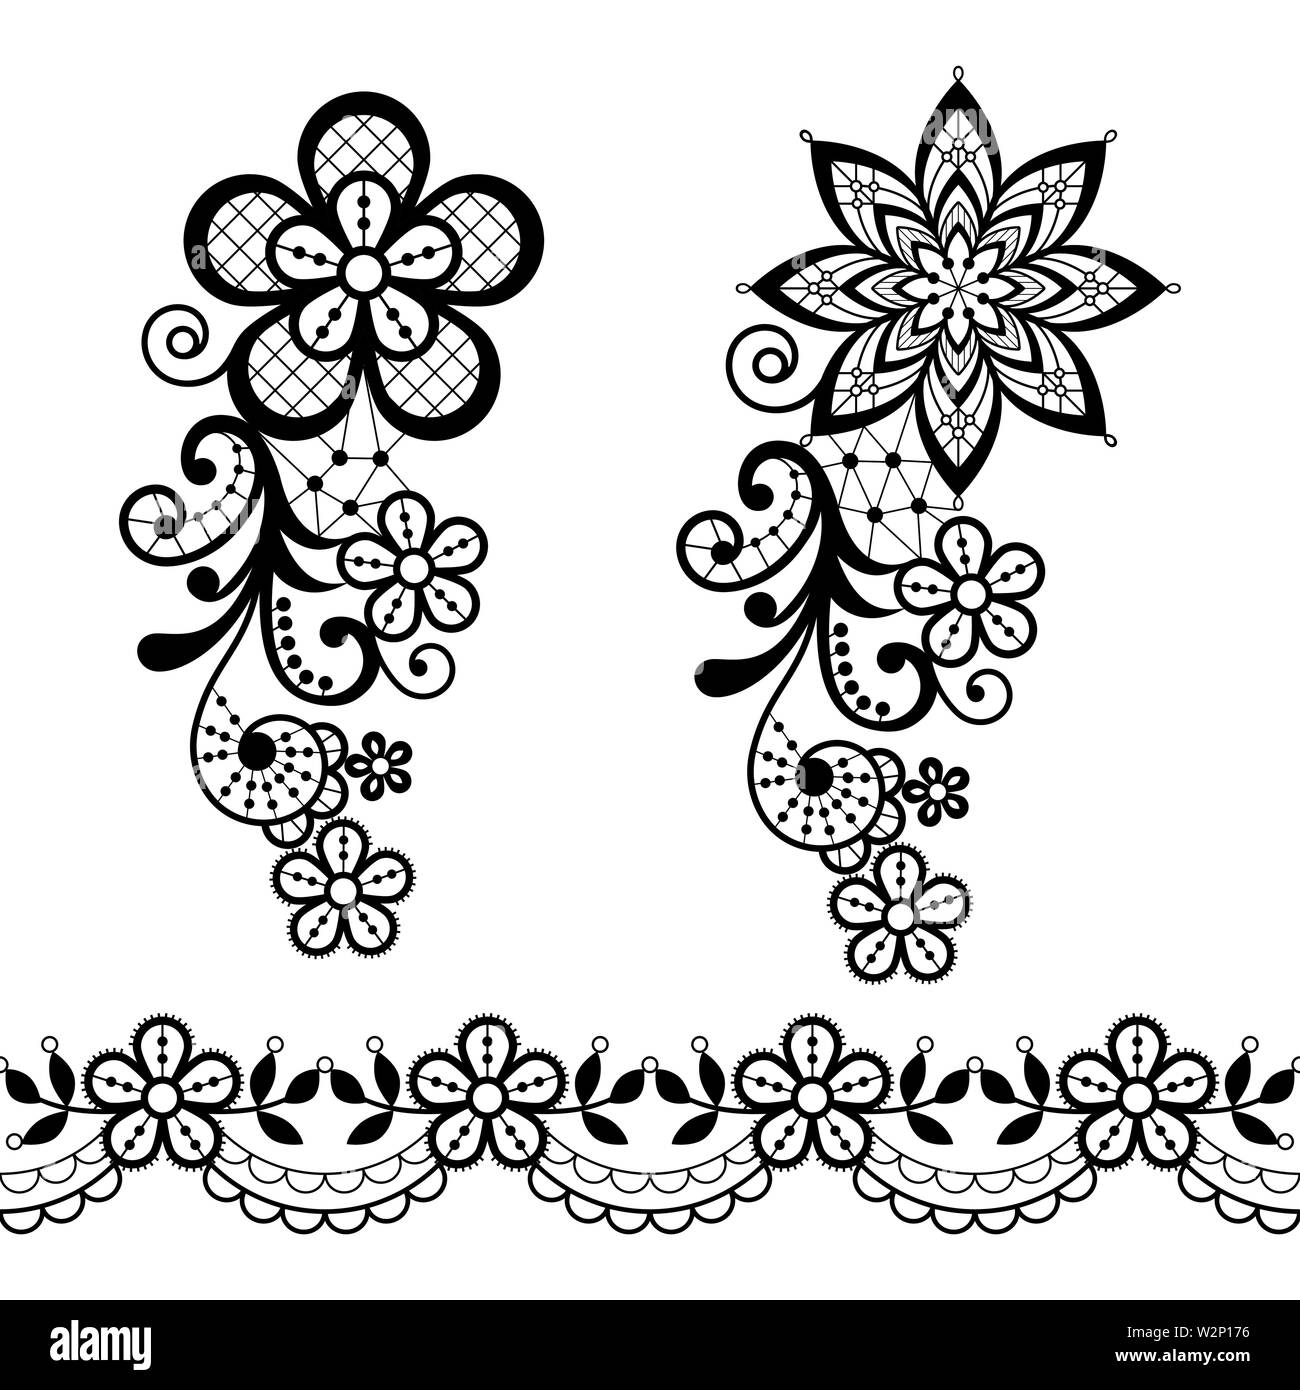 vintage lace pattern